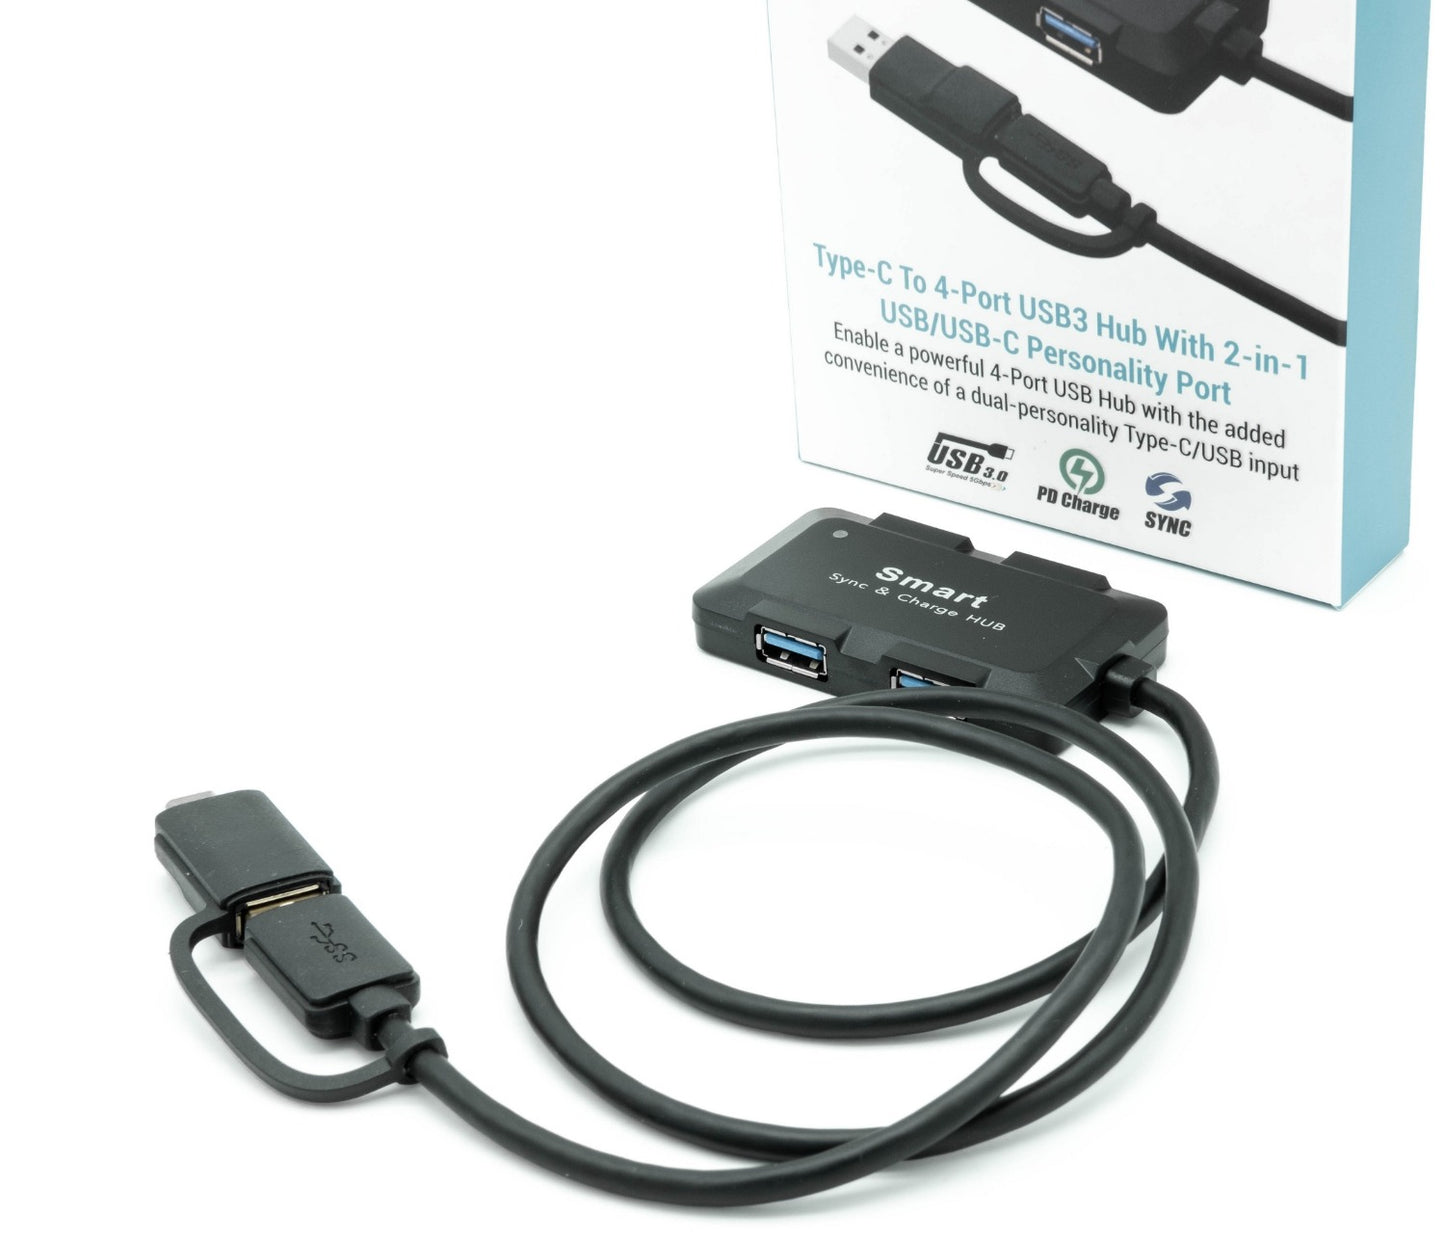 Versatile Type-C to USB3 adapter